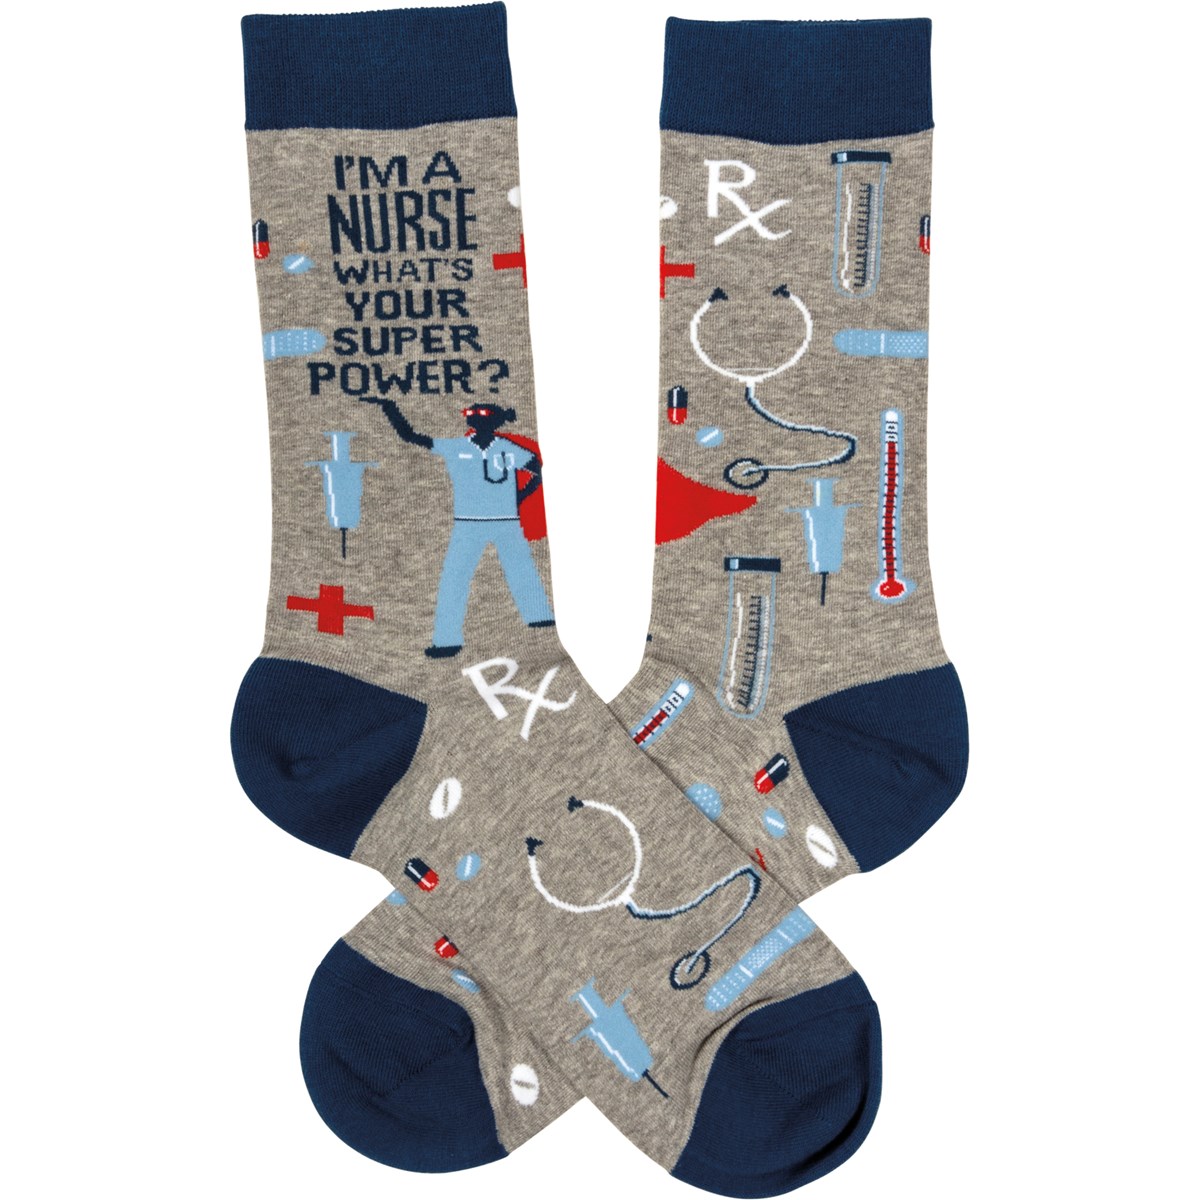 I'm A Nurse What's Your Super Power Socks - Cotton, Nylon, Spandex